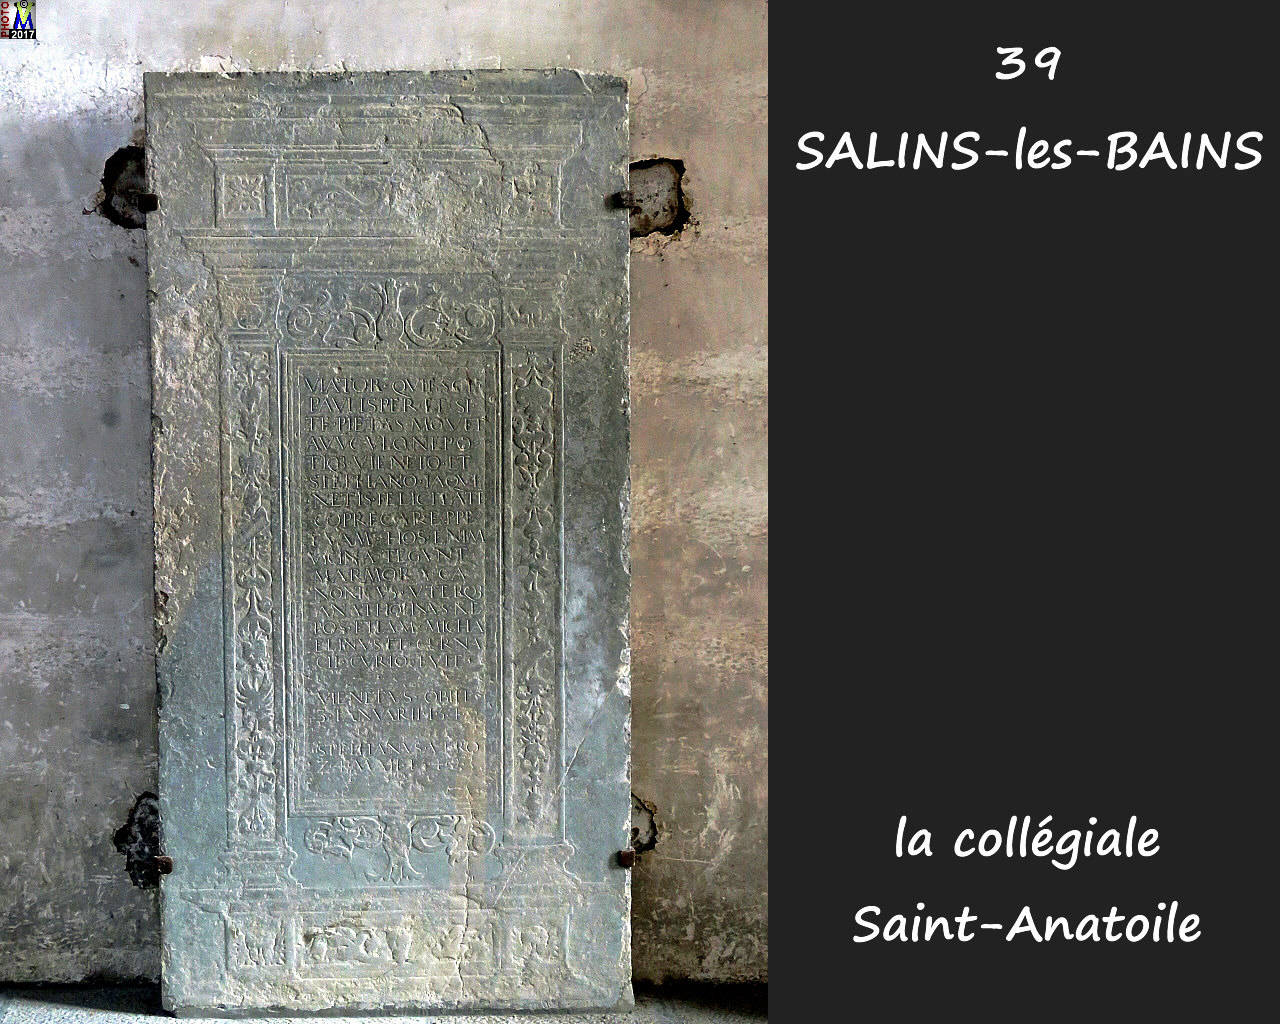 39SALINS-LES-BAINS_collegiale_254.jpg